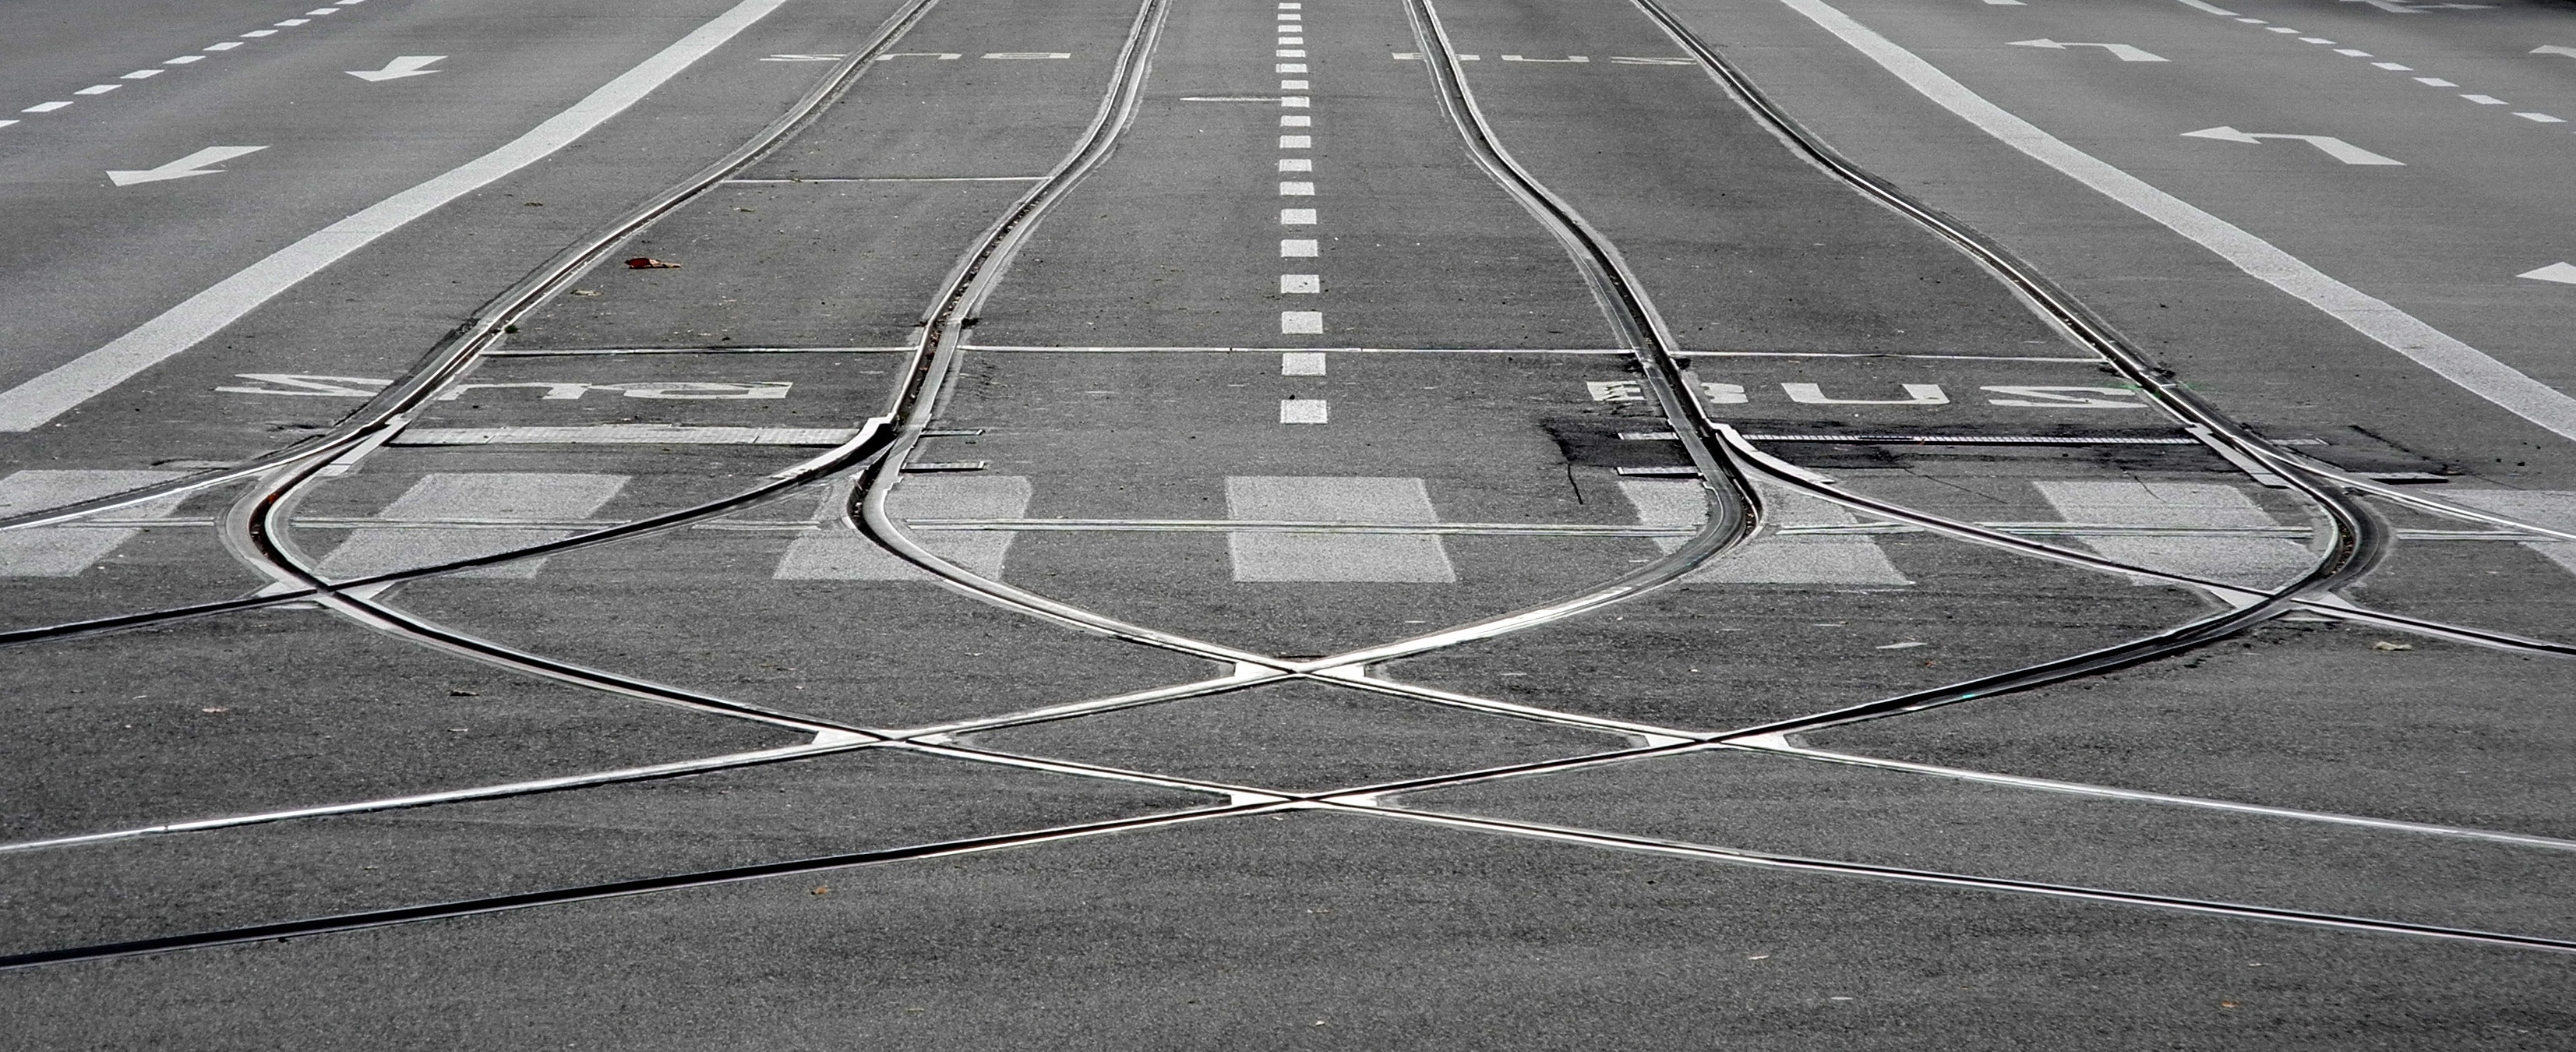 greyscale photo of airport runway